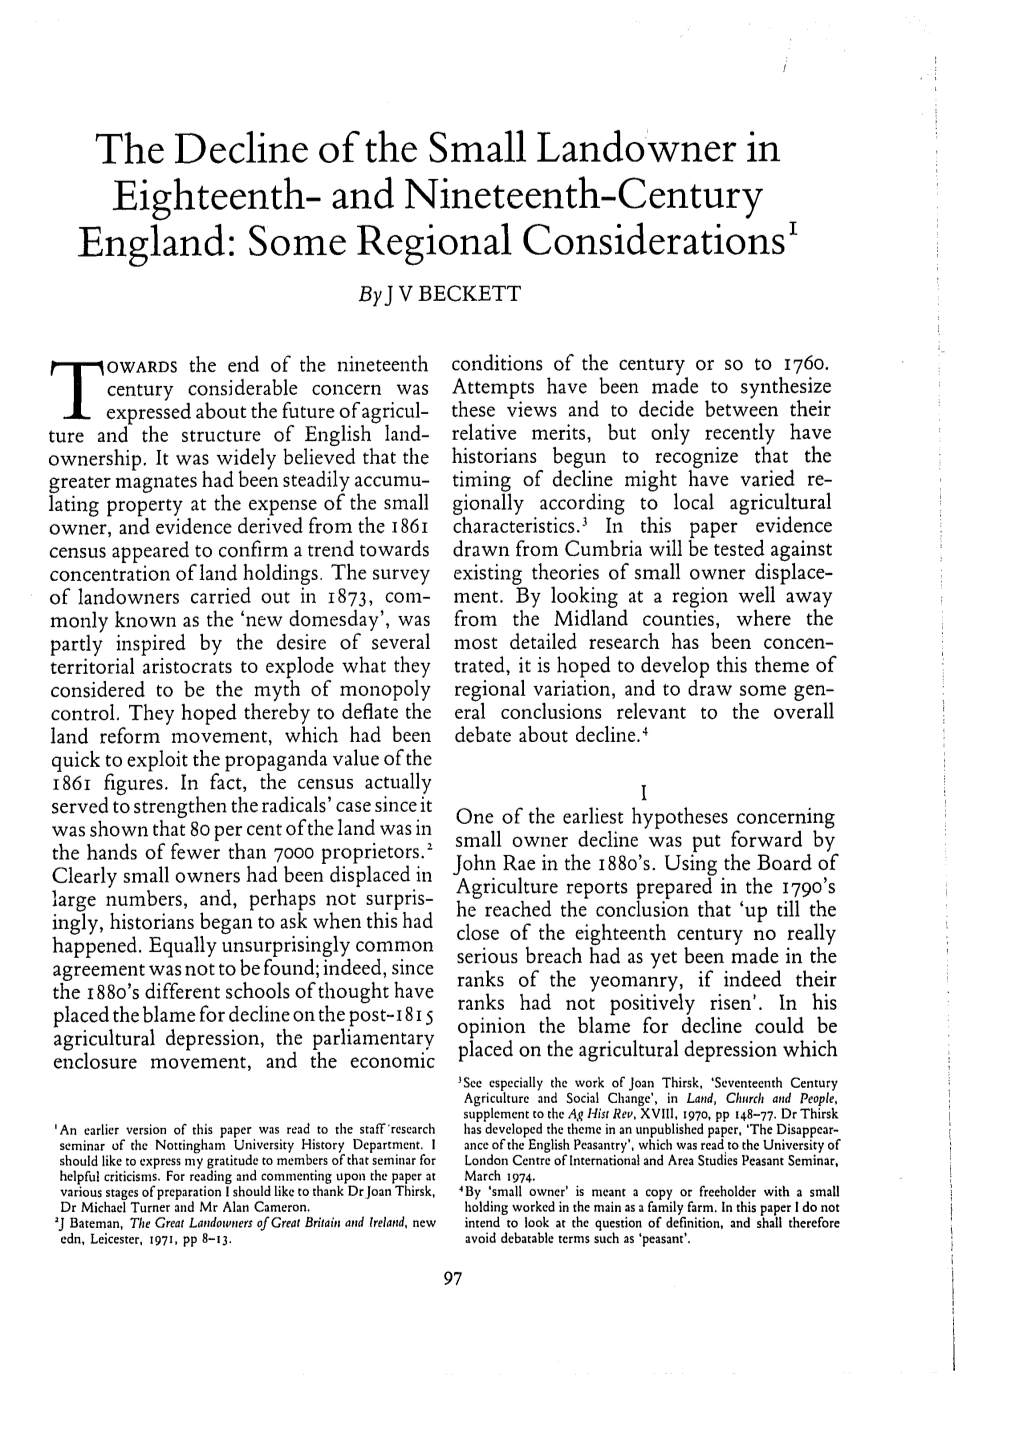 And Nineteenth-Century England: Some Regional Considerations Byj V BECKETT